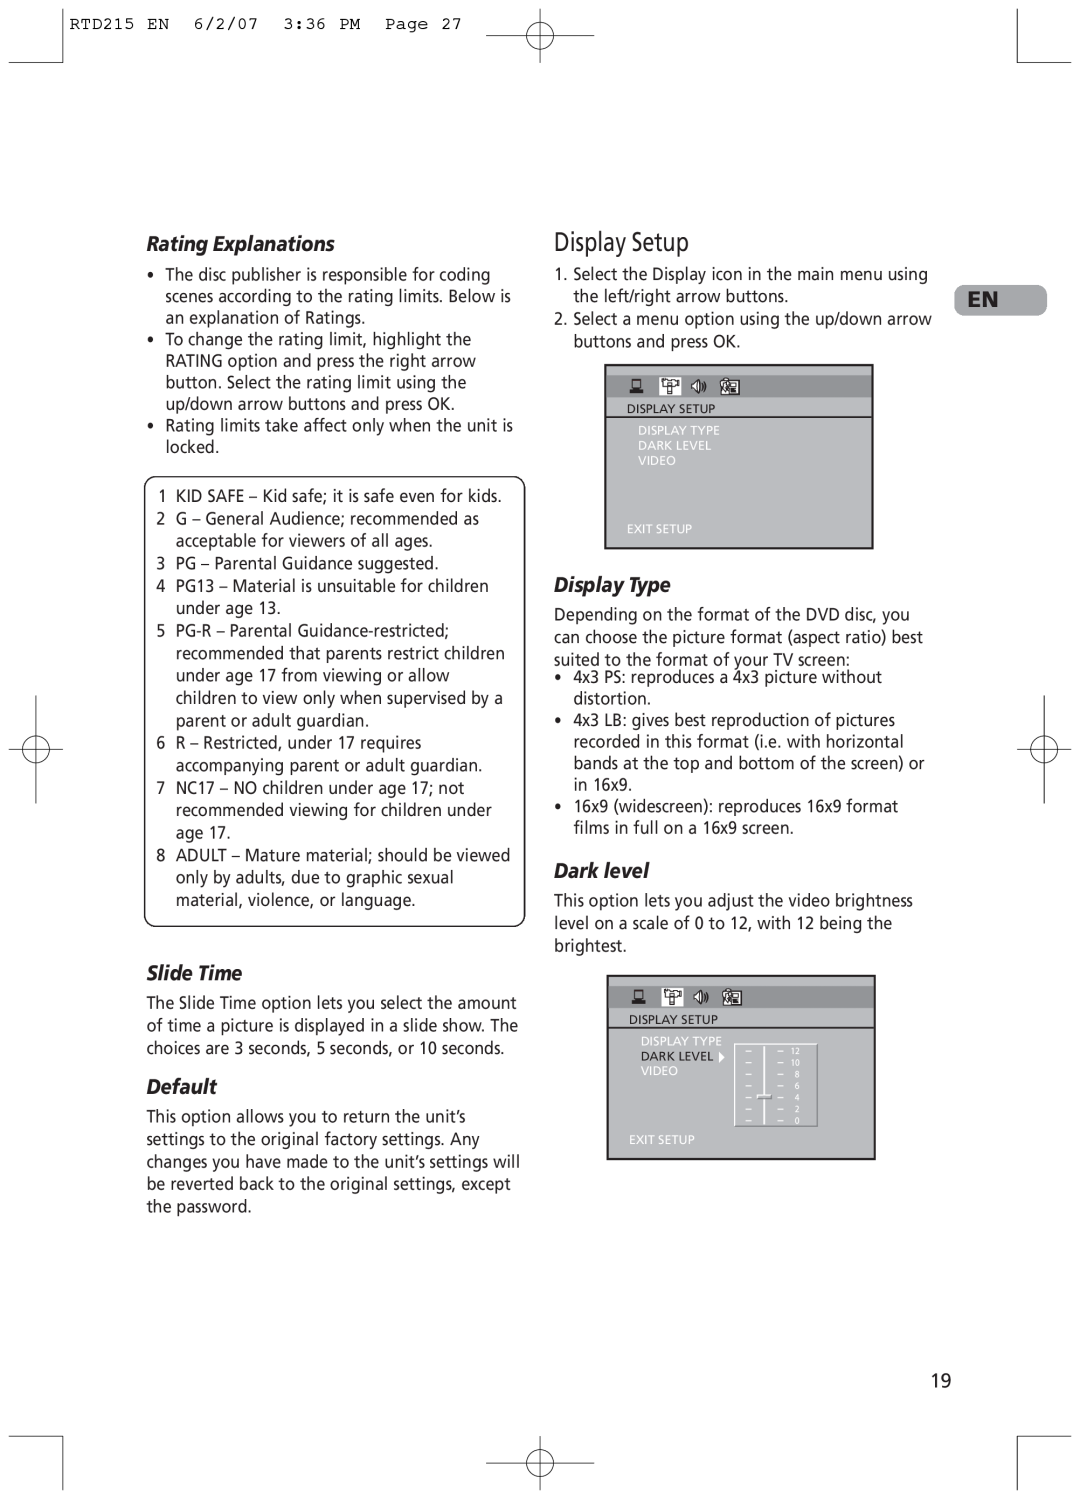 RCA RTD215 user manual Display Setup, Rating Explanations, Slide Time, Default, Display Type, Dark level 